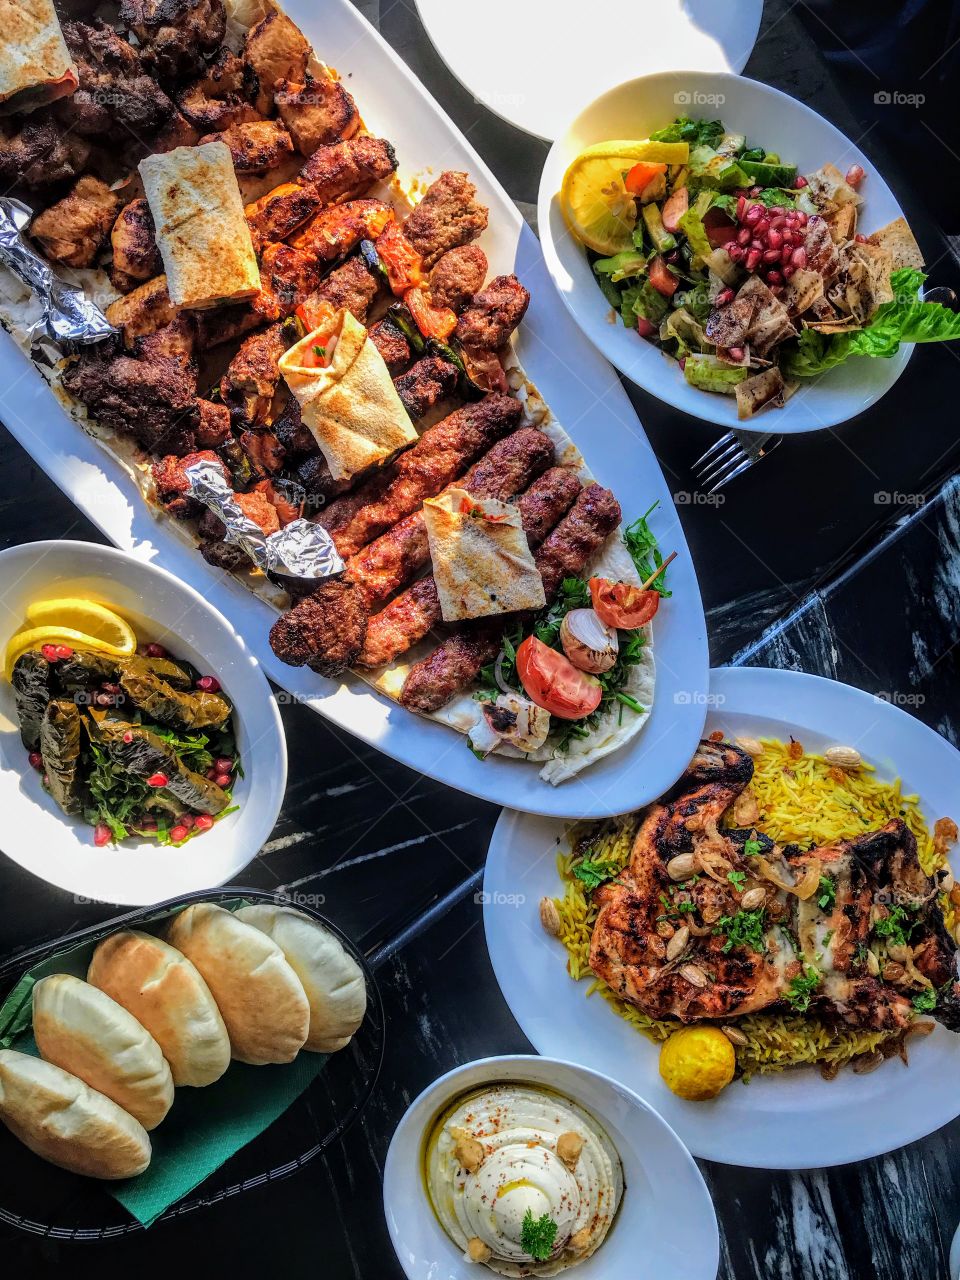 Middle eastern feast 